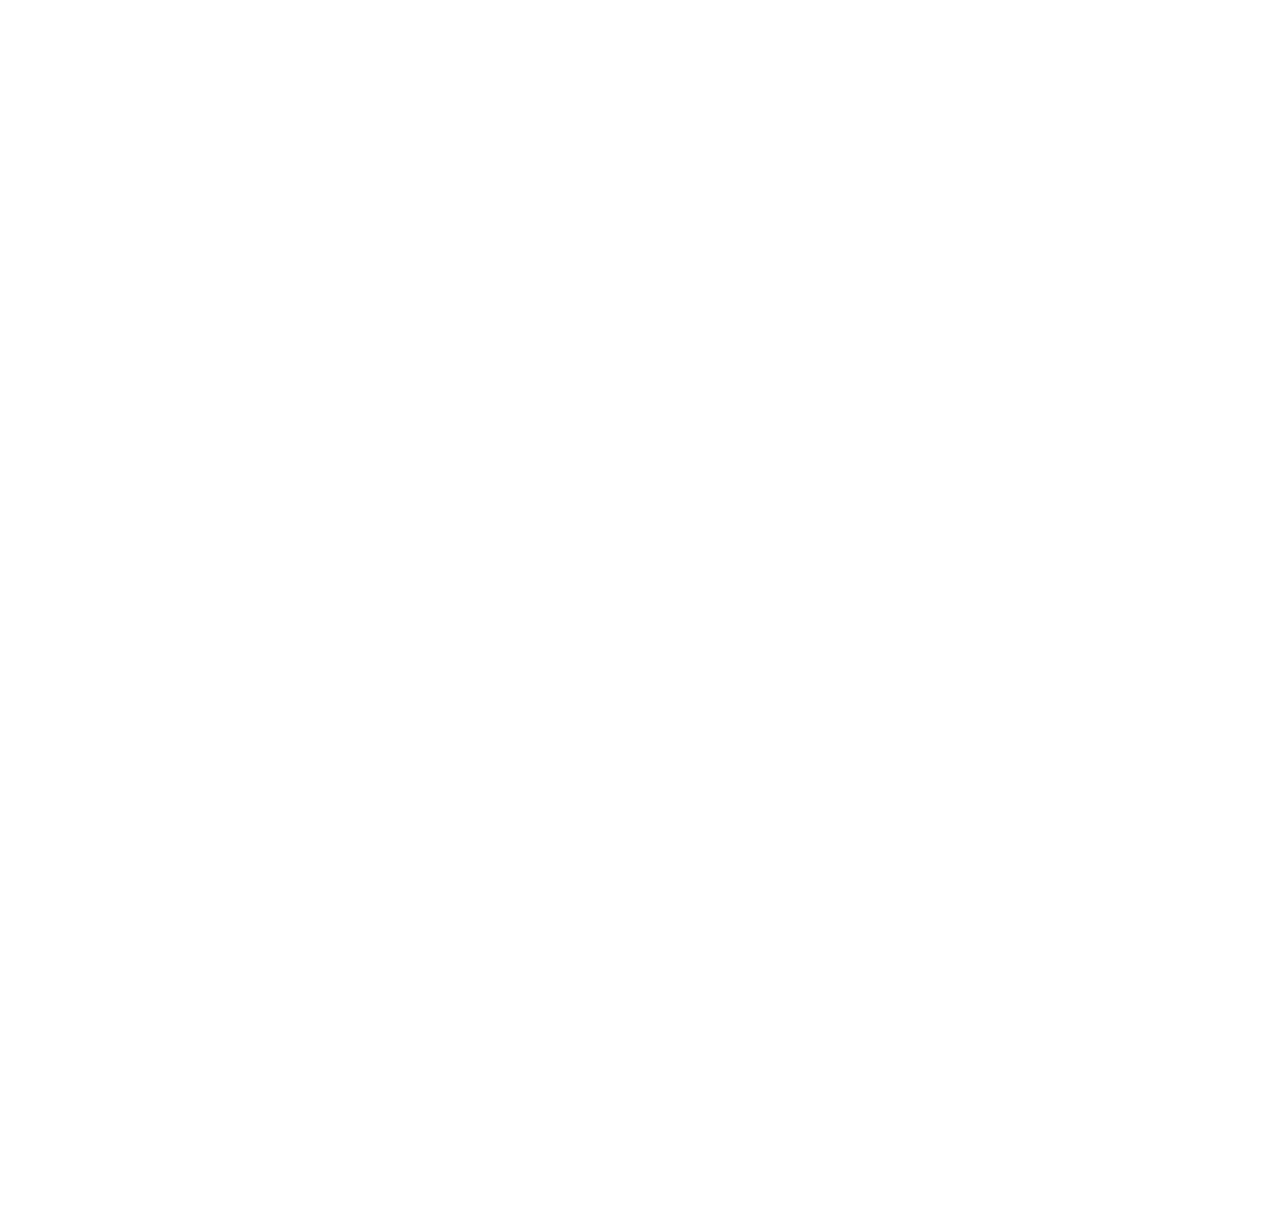 SHAWN MURPHY MEDIA 's web page